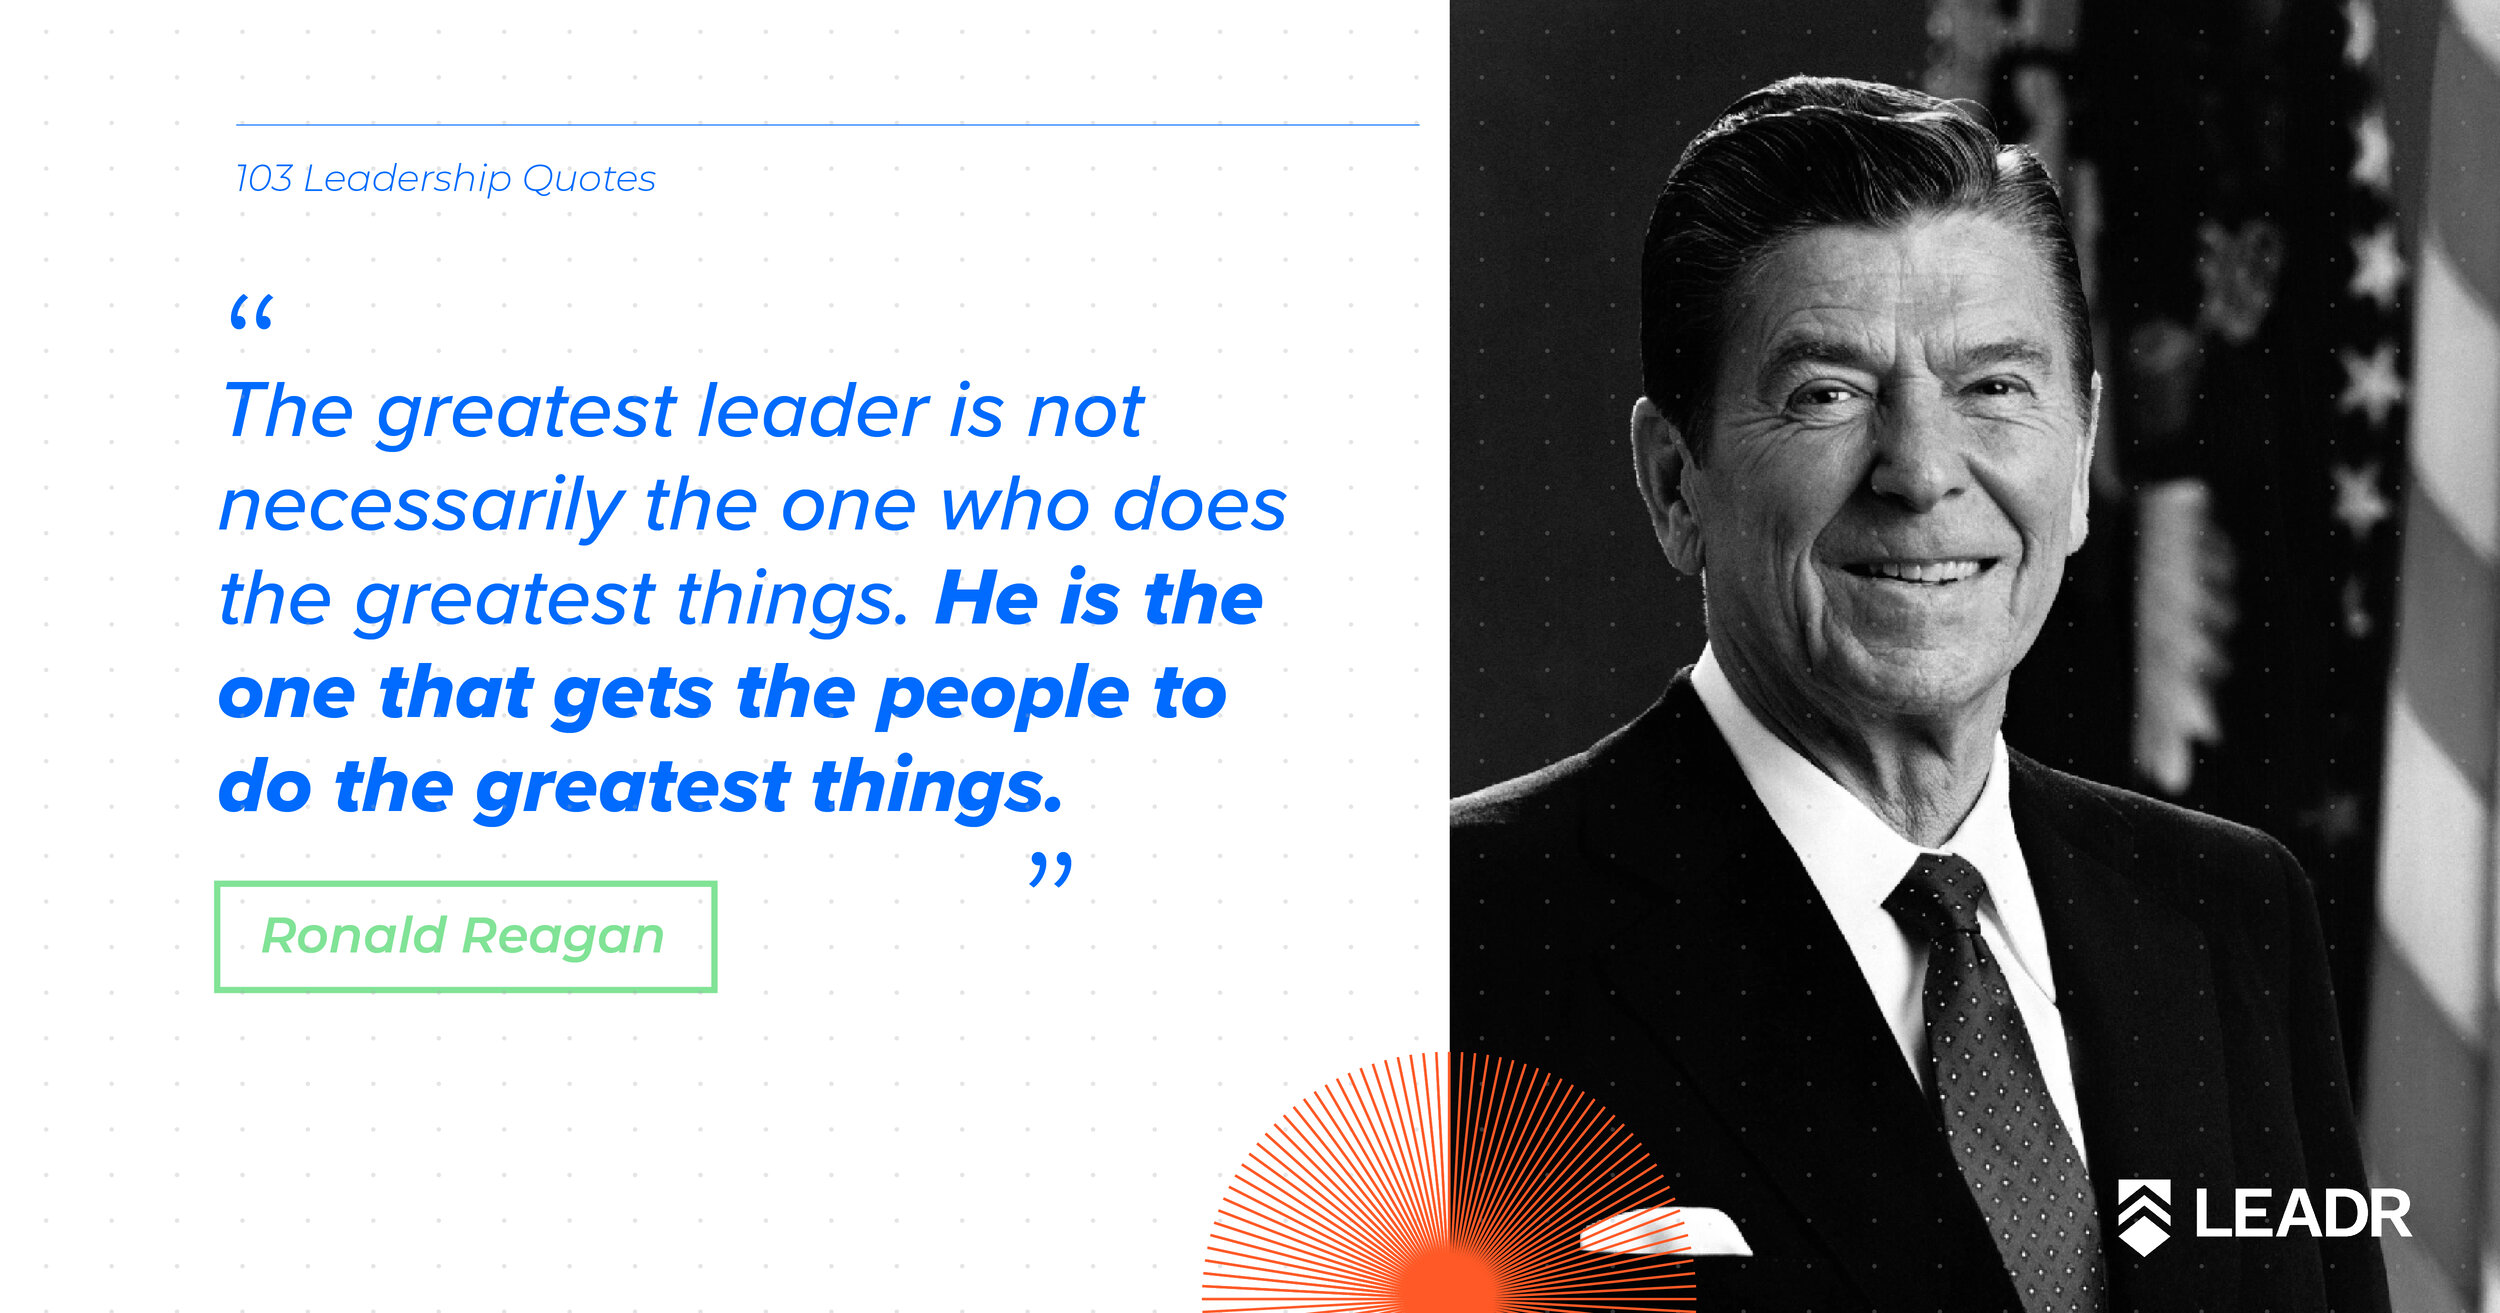 Royalty free downloadable leadership quotes - Ronald Reagan